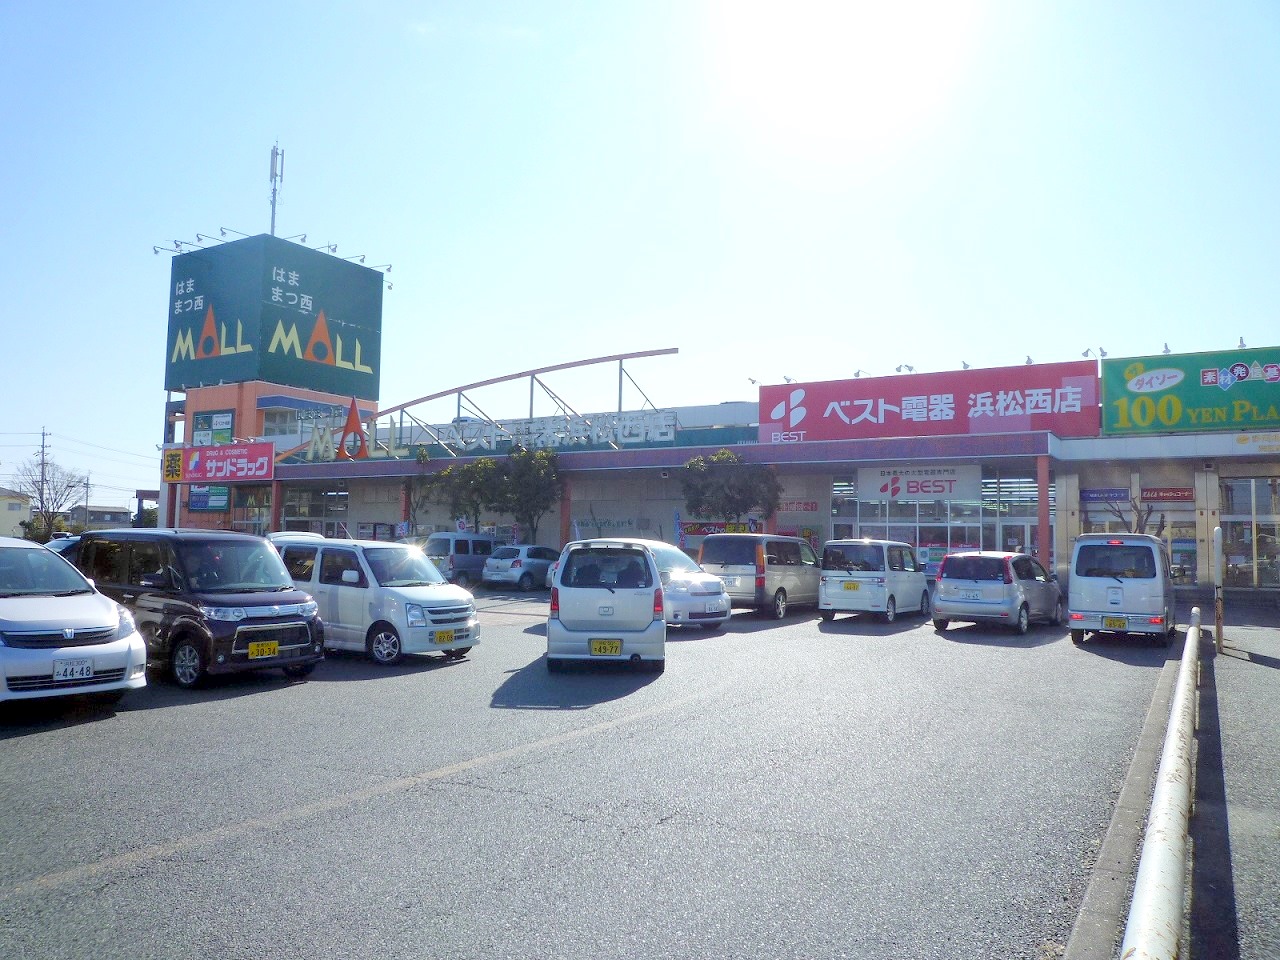 Shopping centre. 716m until Hamamatsunishi MALL (shopping center)